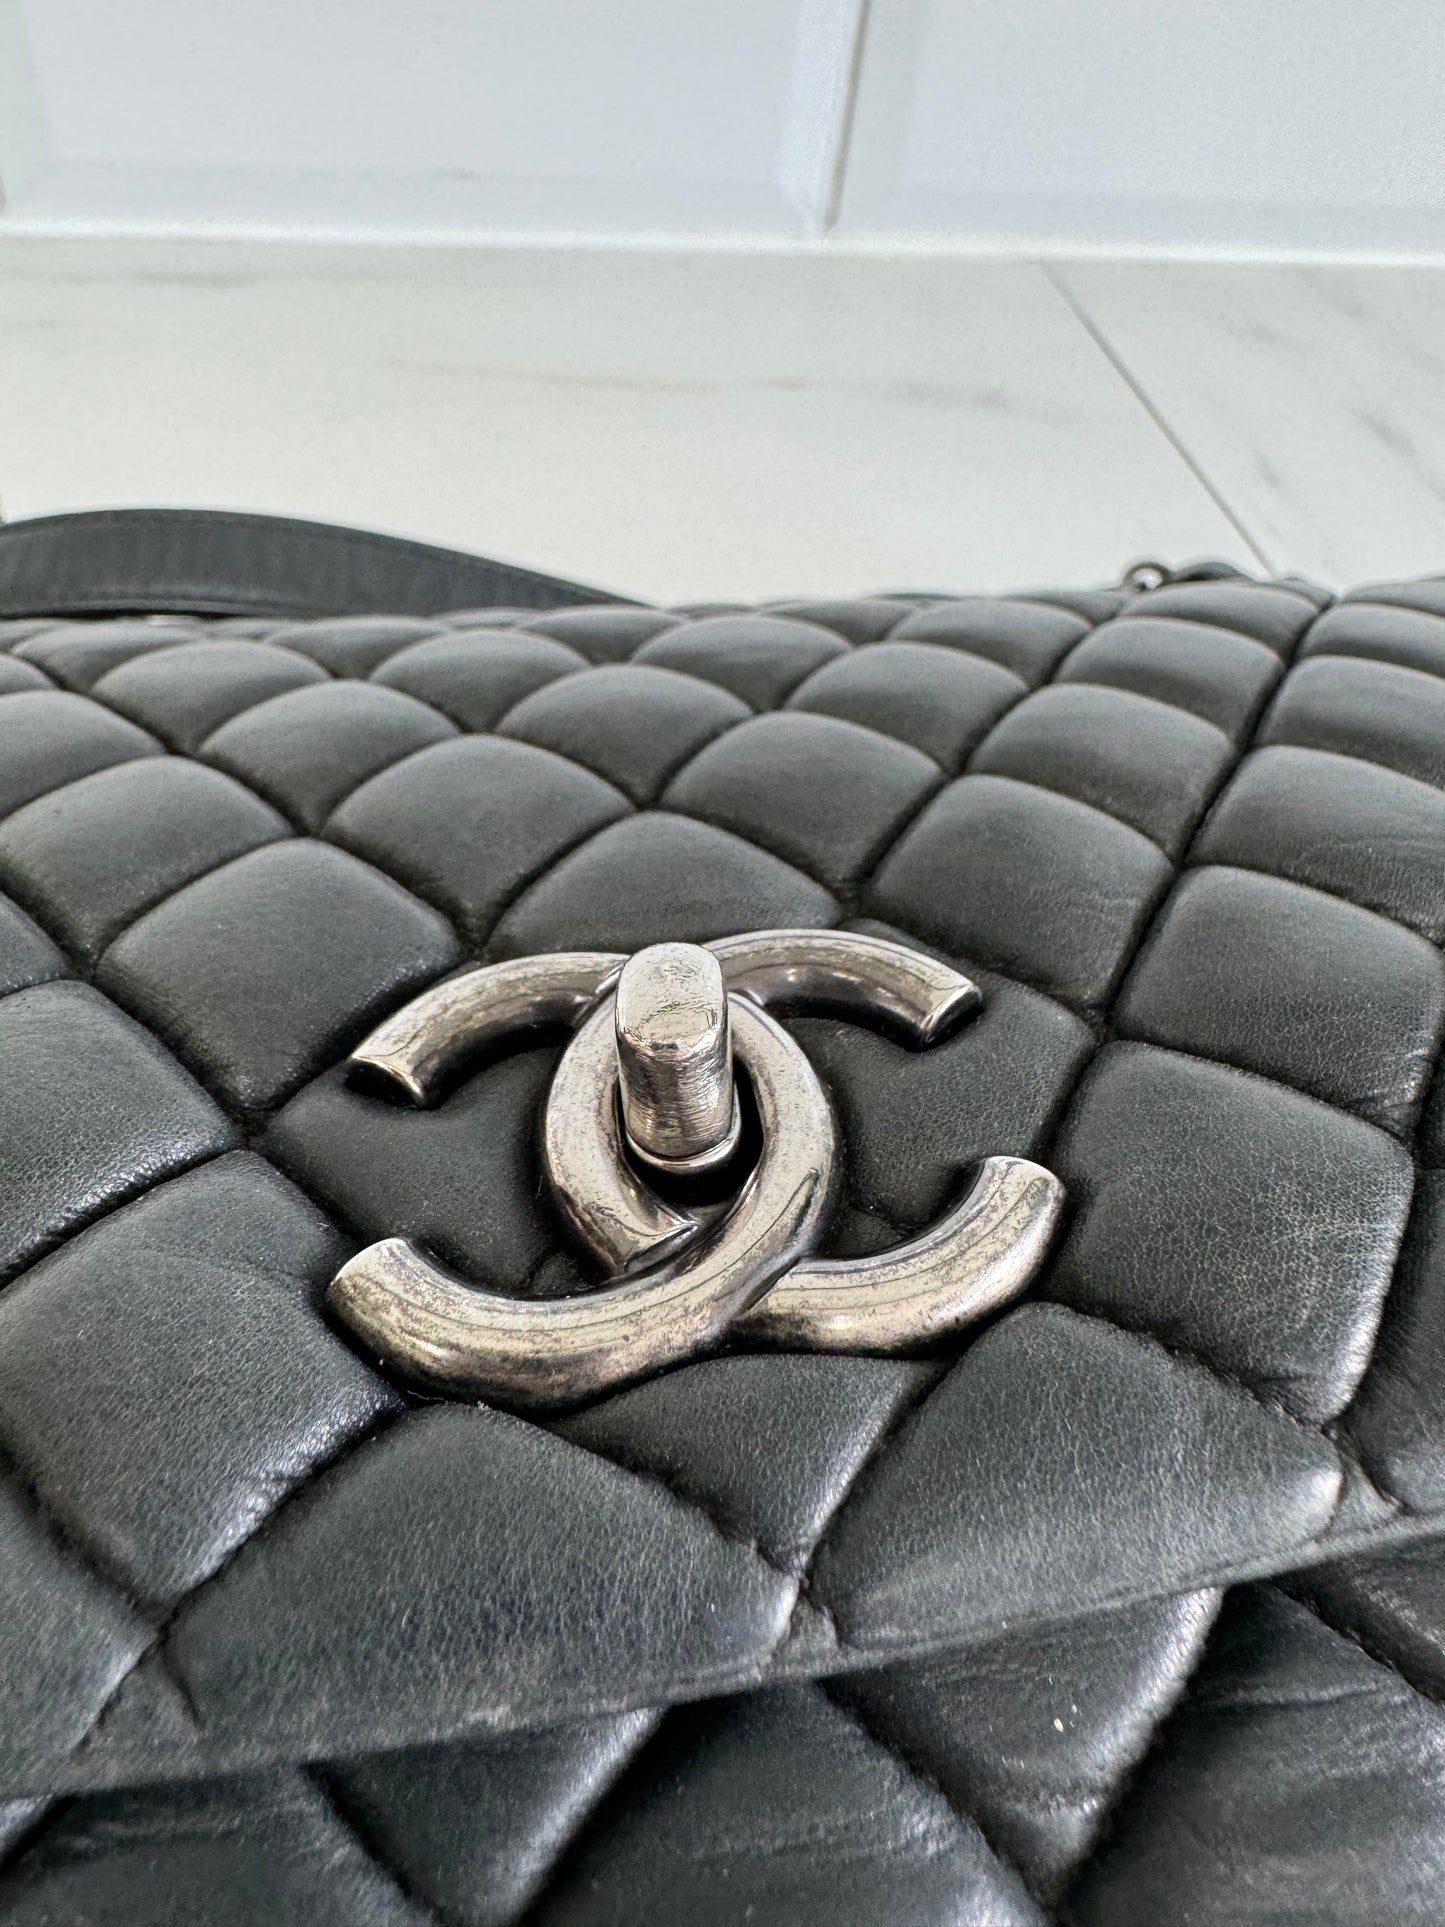 Chanel Iridescent Cc Bubble Flap Shoulder Bag - Black